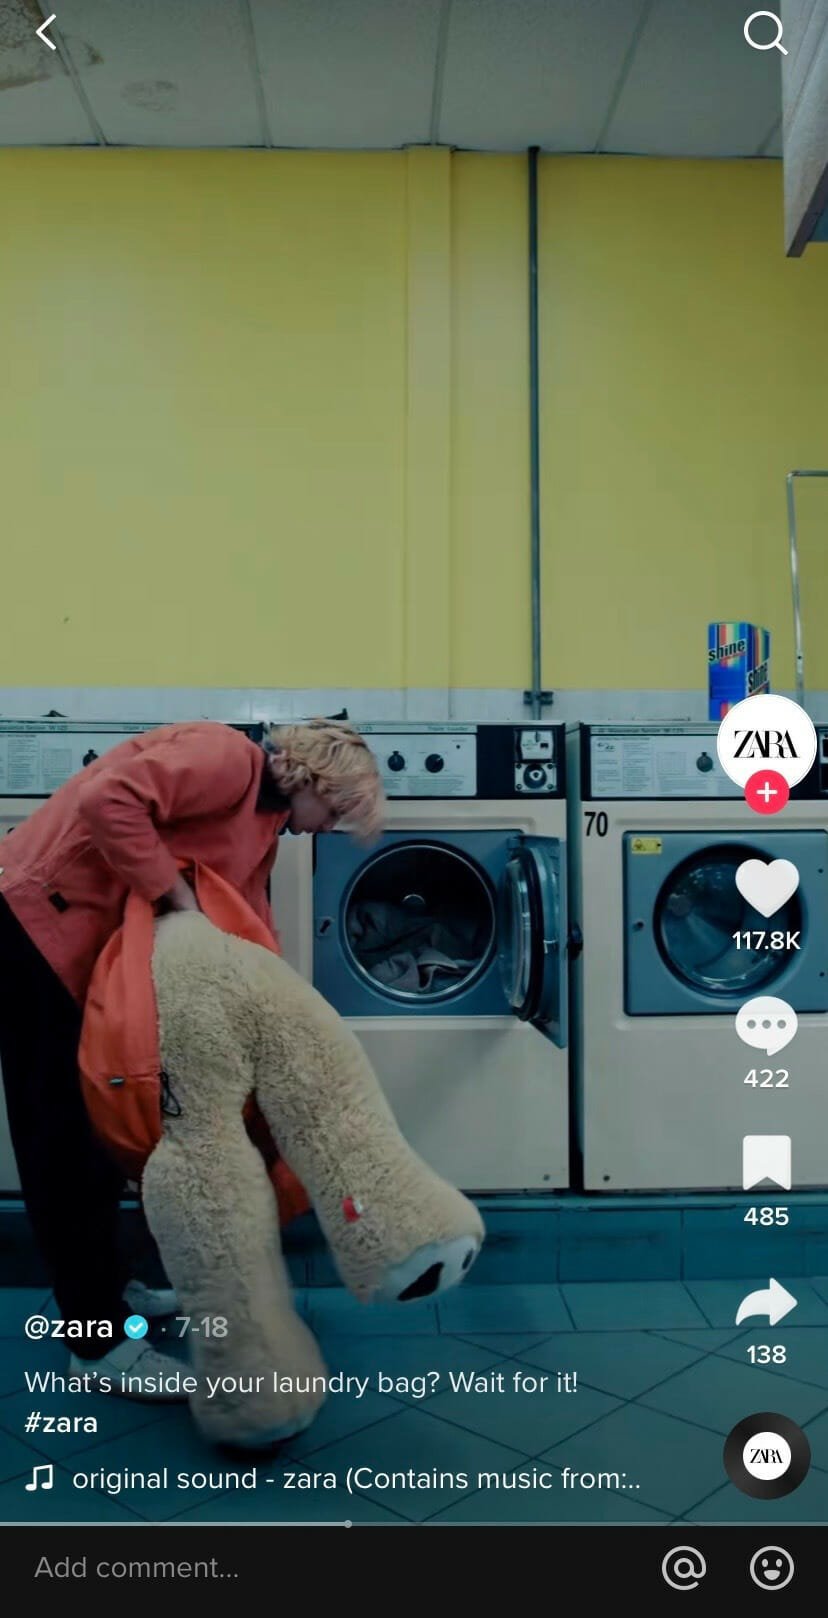 A zara tiktok video showing their customer stuffing a bear into a washing machine